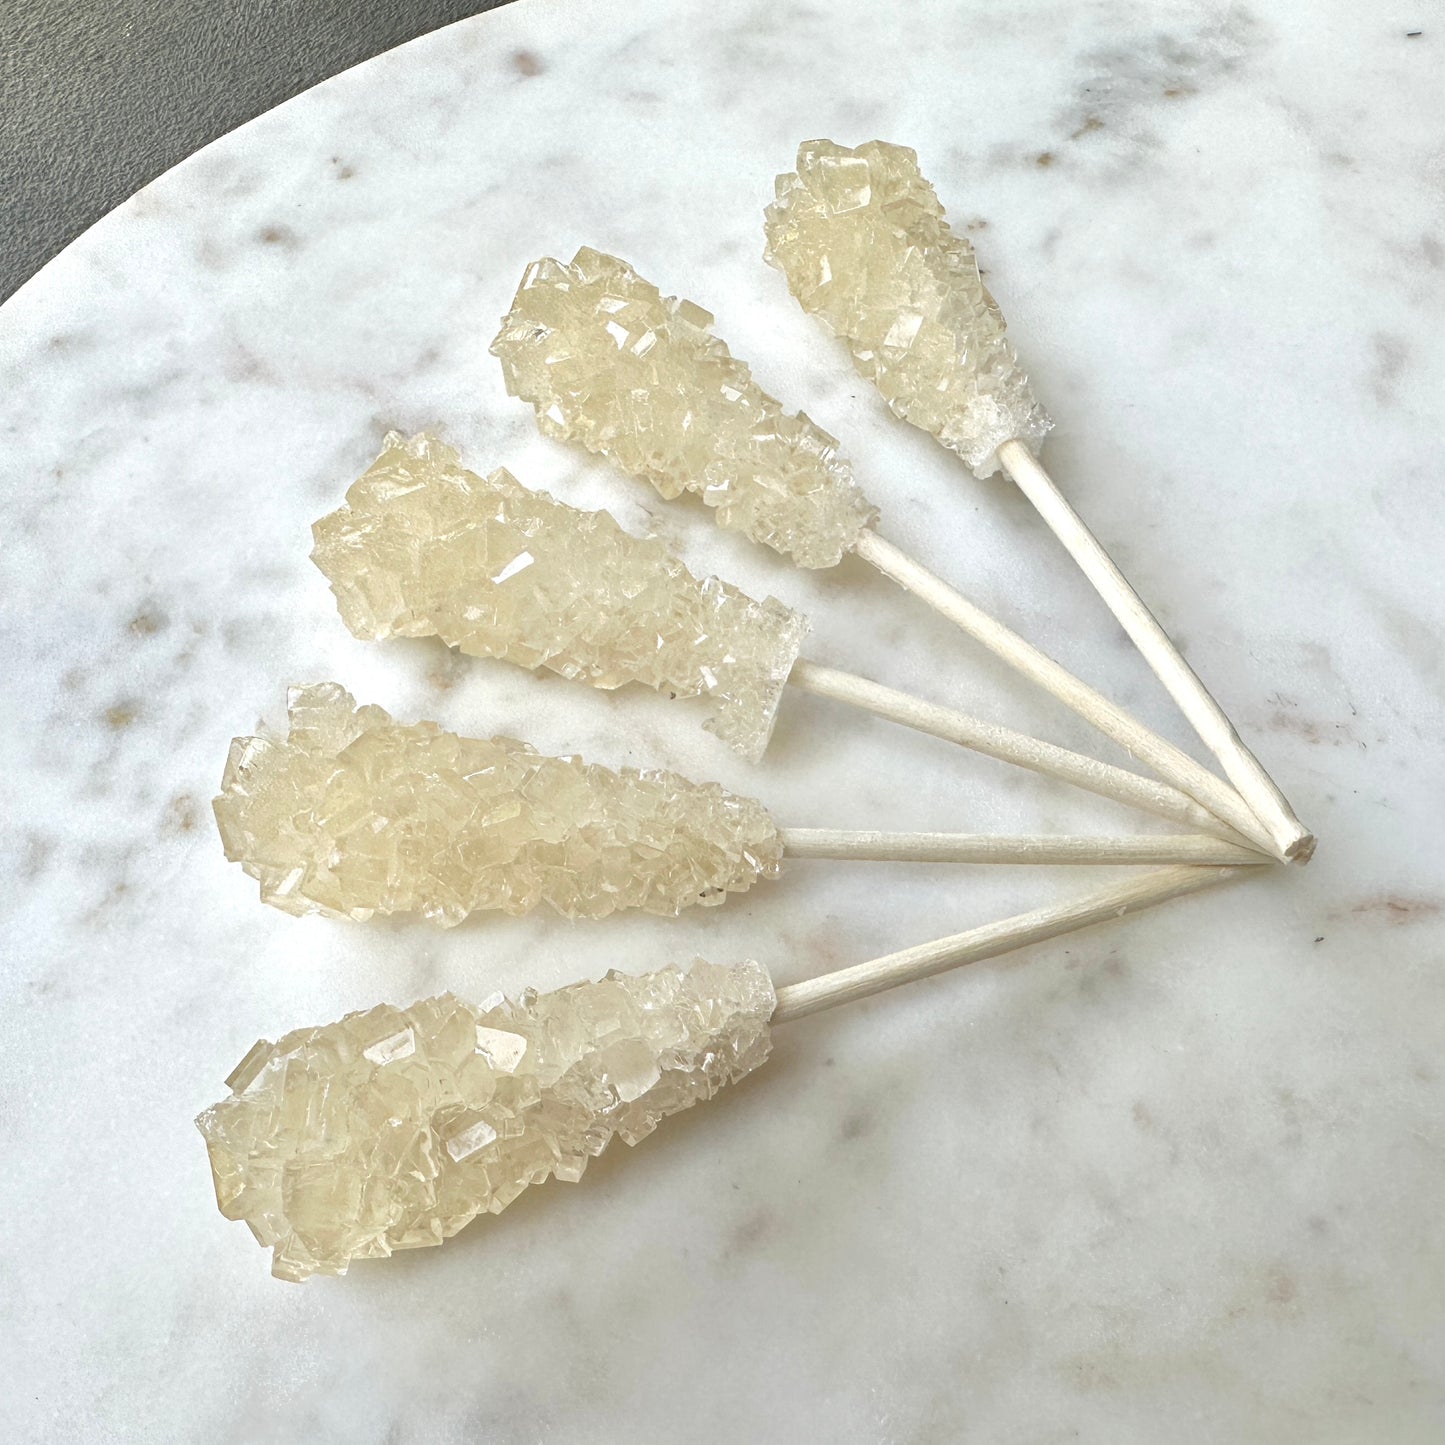 White Rock Candy Sugar | Swizzler Stick